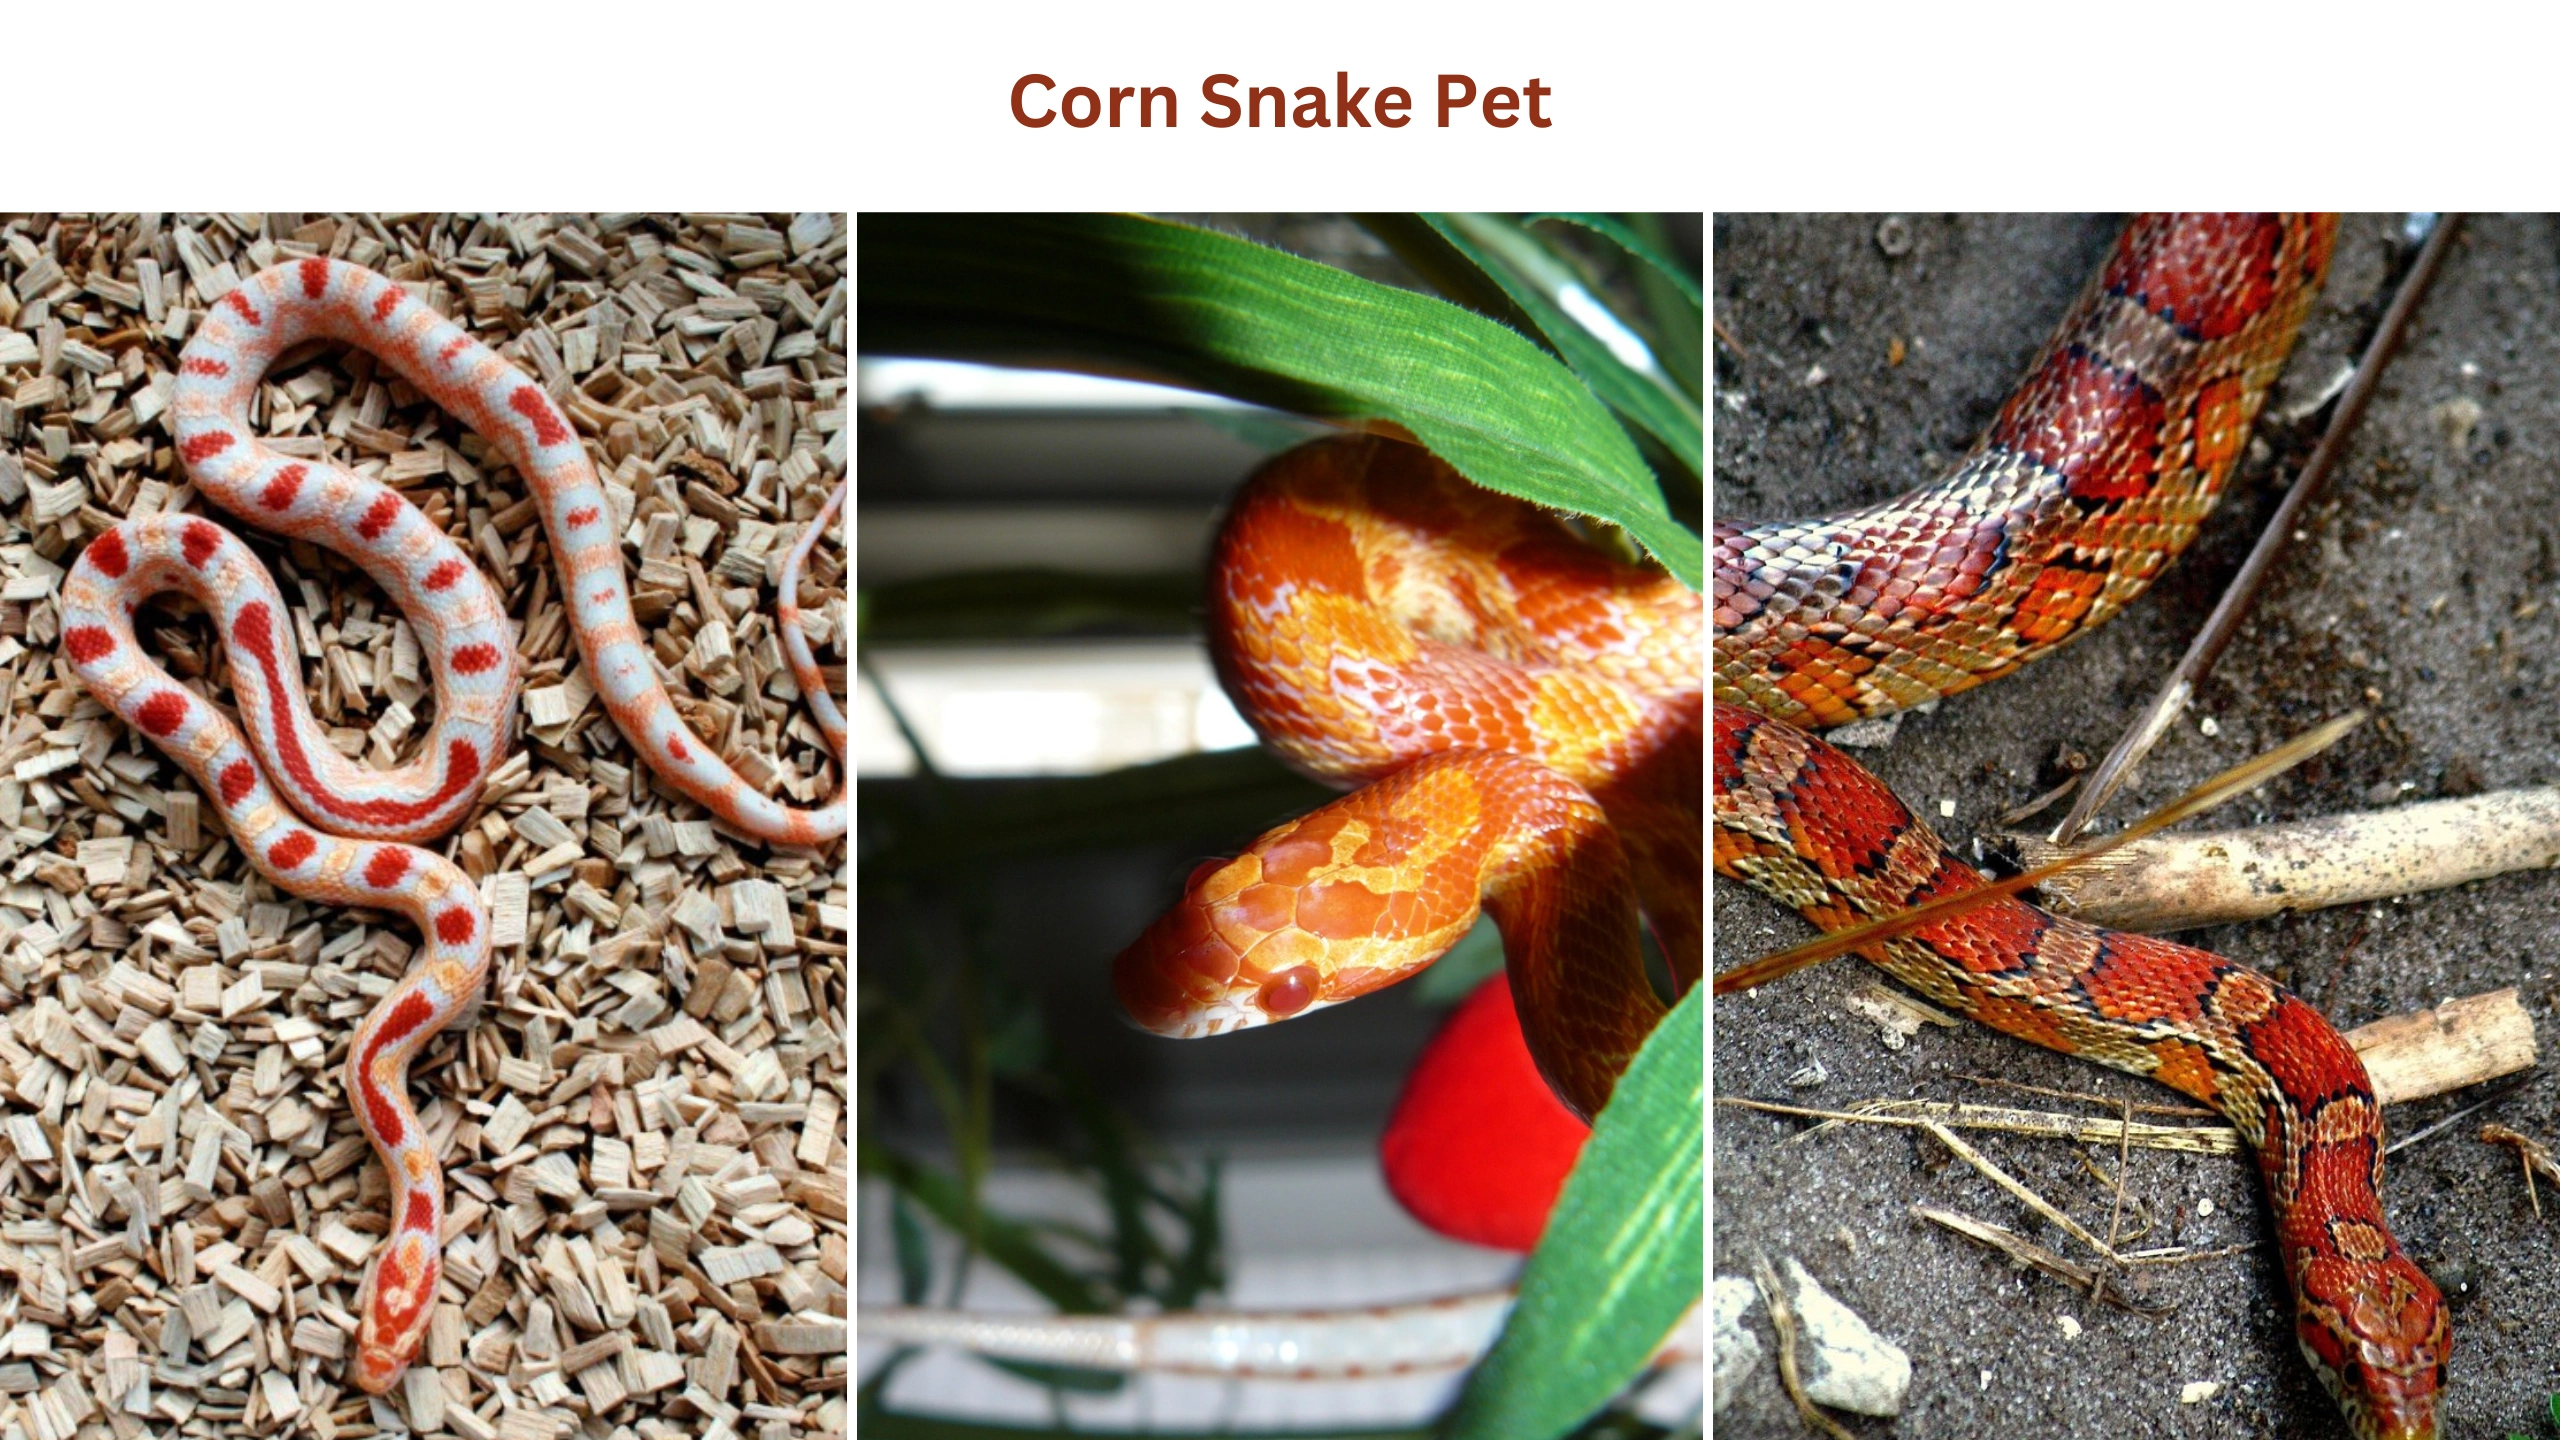 Corn snake pet